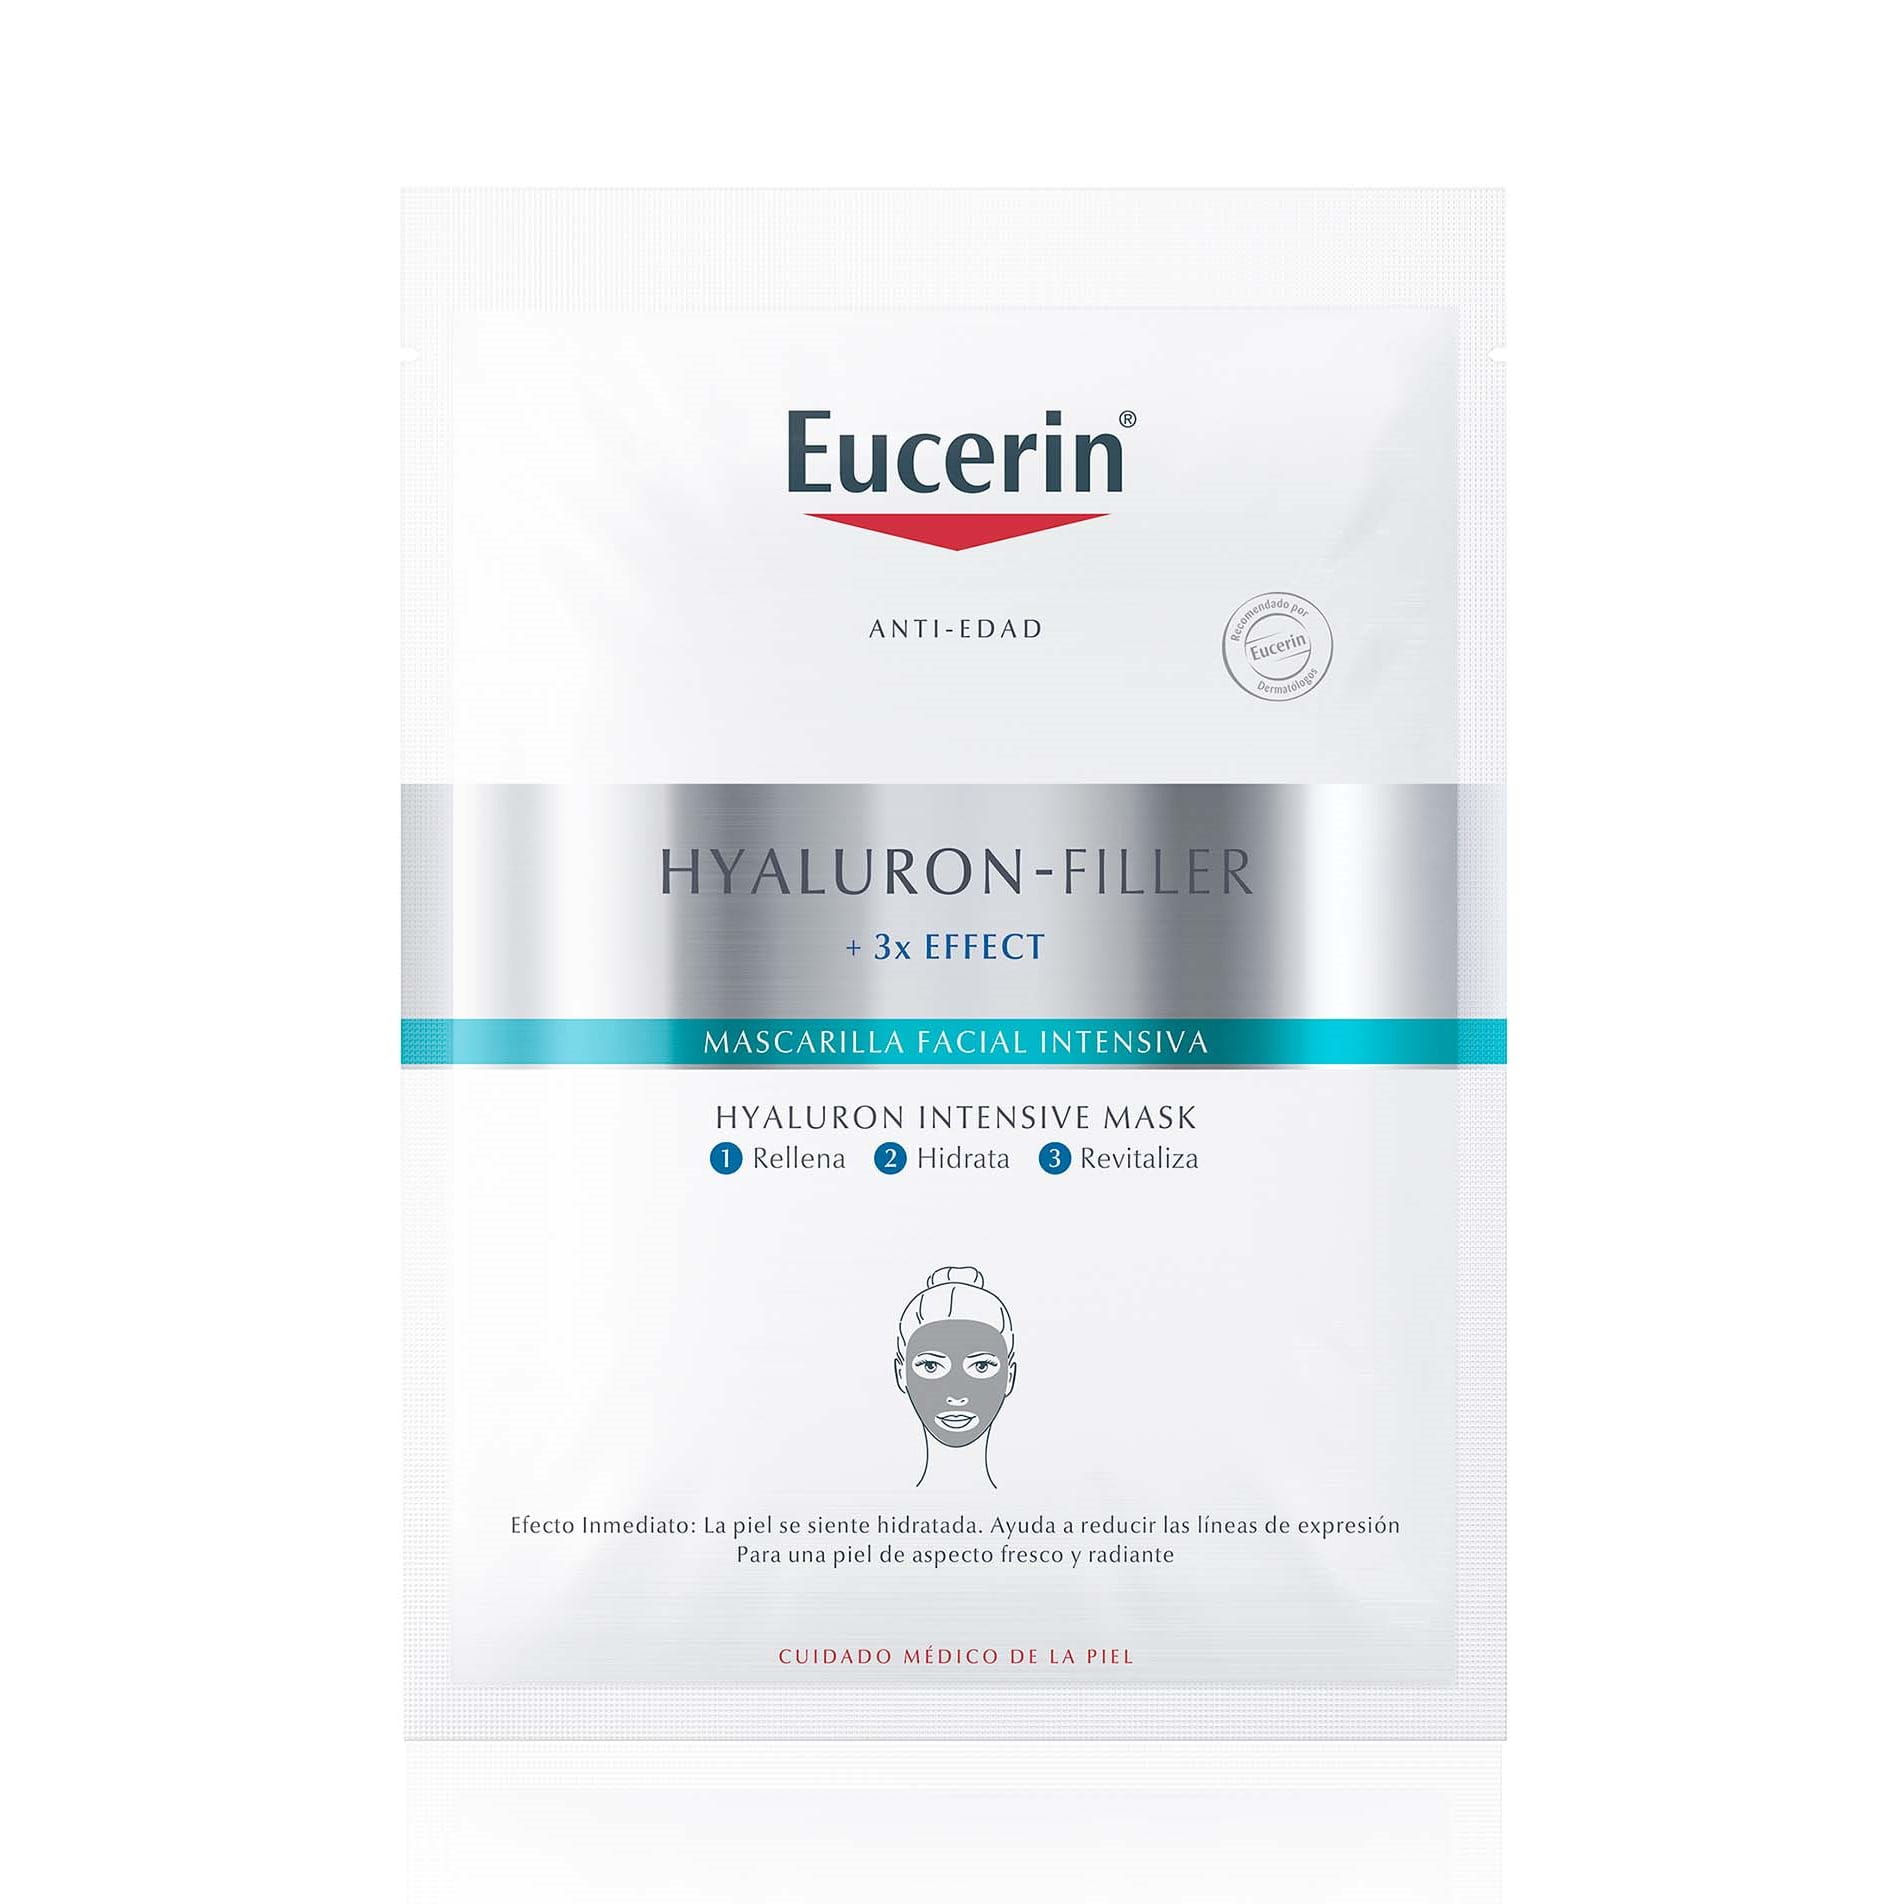 Eucerin Hyaluron-Filler Mascarilla Facial Intensiva